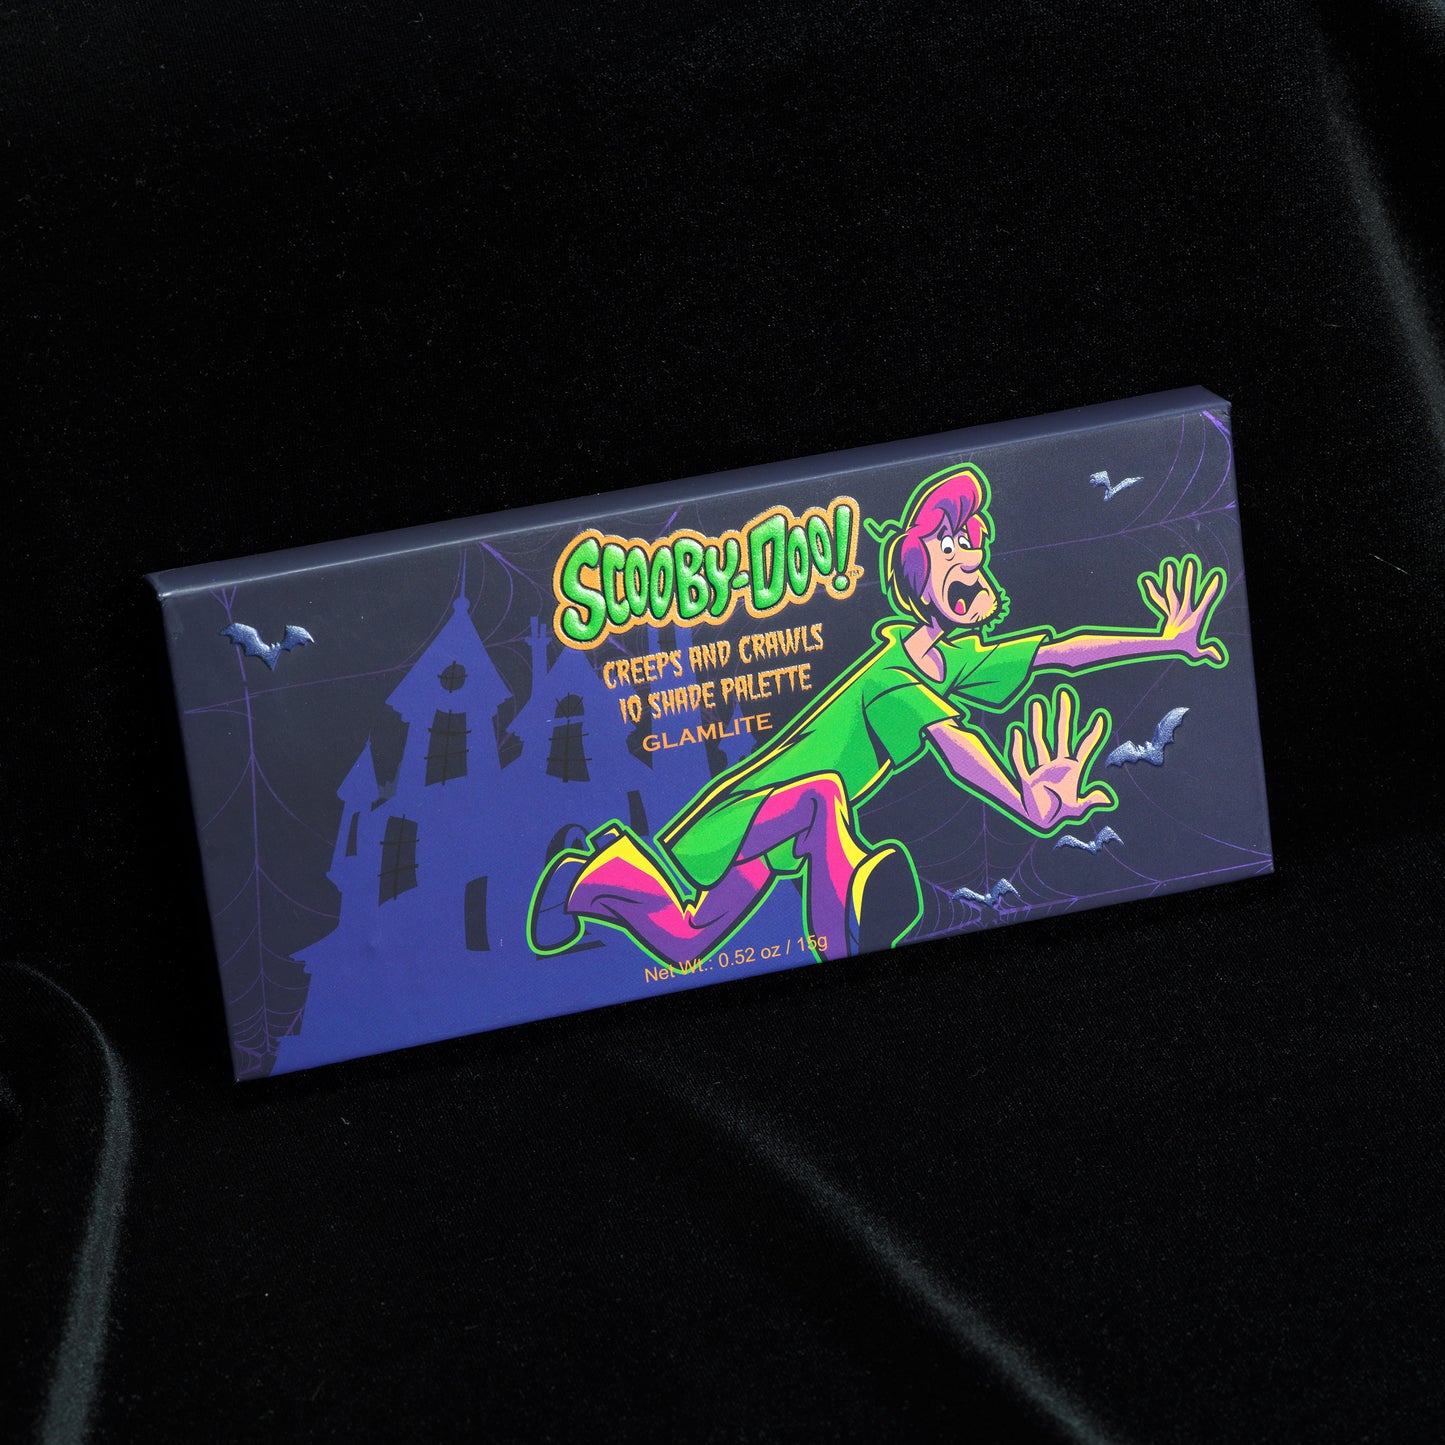 Scooby-Doo™ x Glamlite "Creeps and Crawls" eyeshadow palette